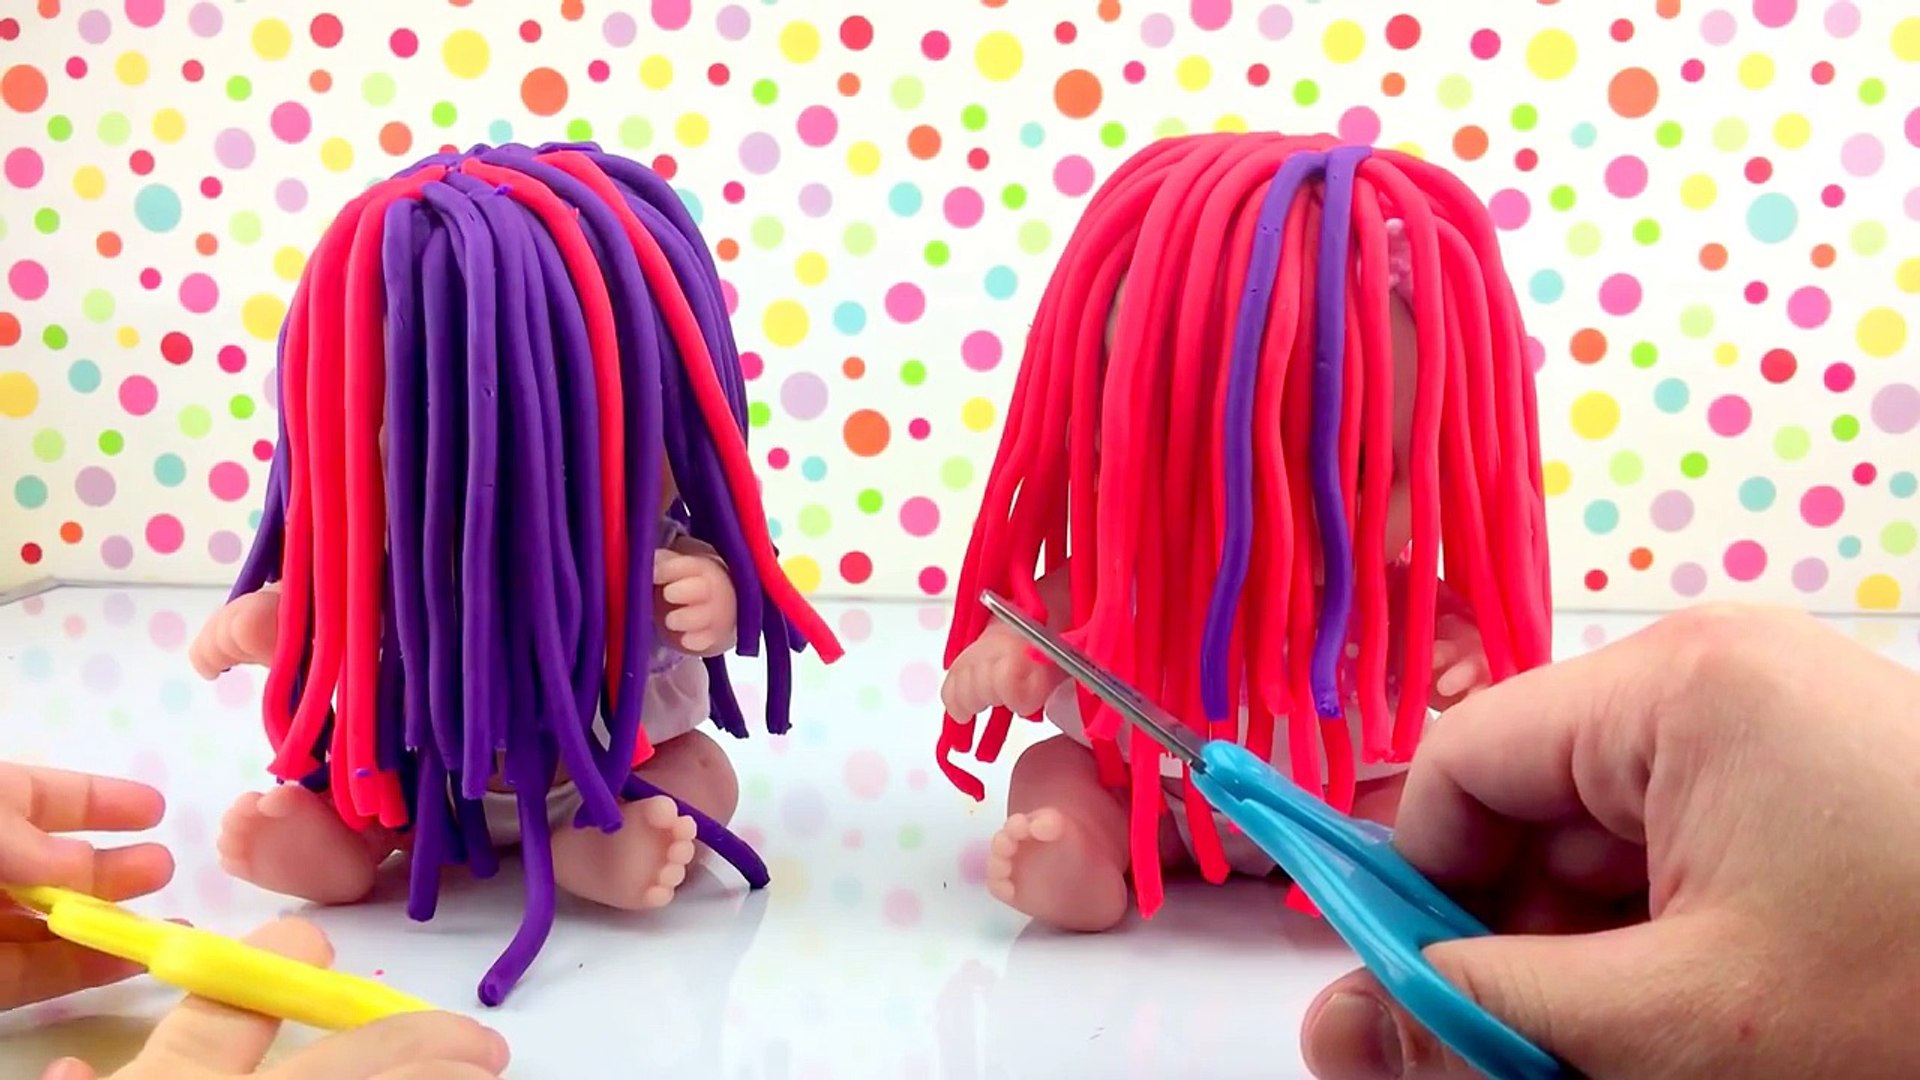 ⁣Twin Babies Baby Dolls Lil Cutesies Play Doh Hair First Haircut for Doll School Part 2